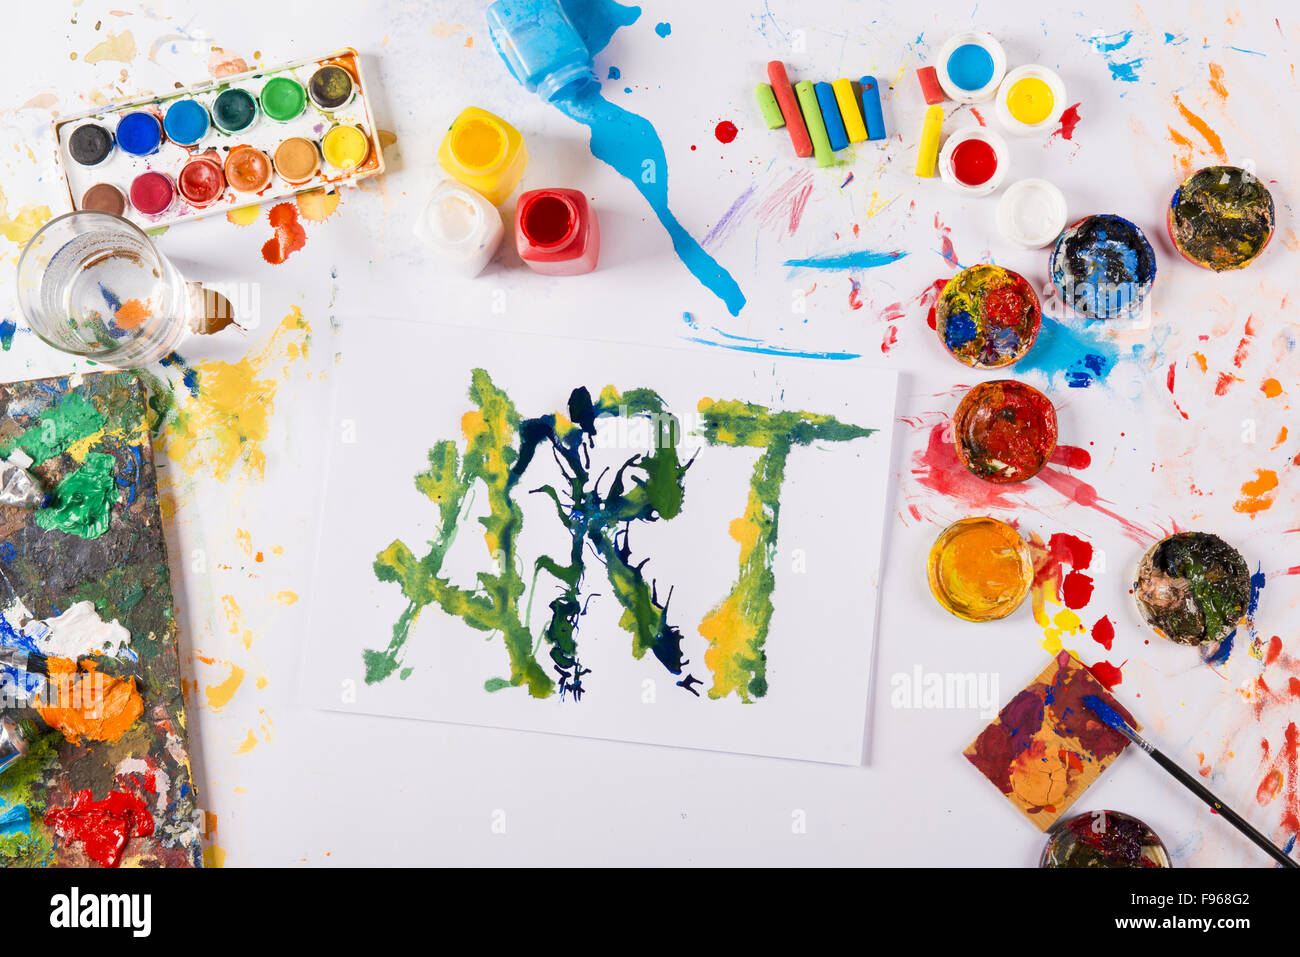 Arte creativa concetto con vernici colorate su carta bianca Foto Stock